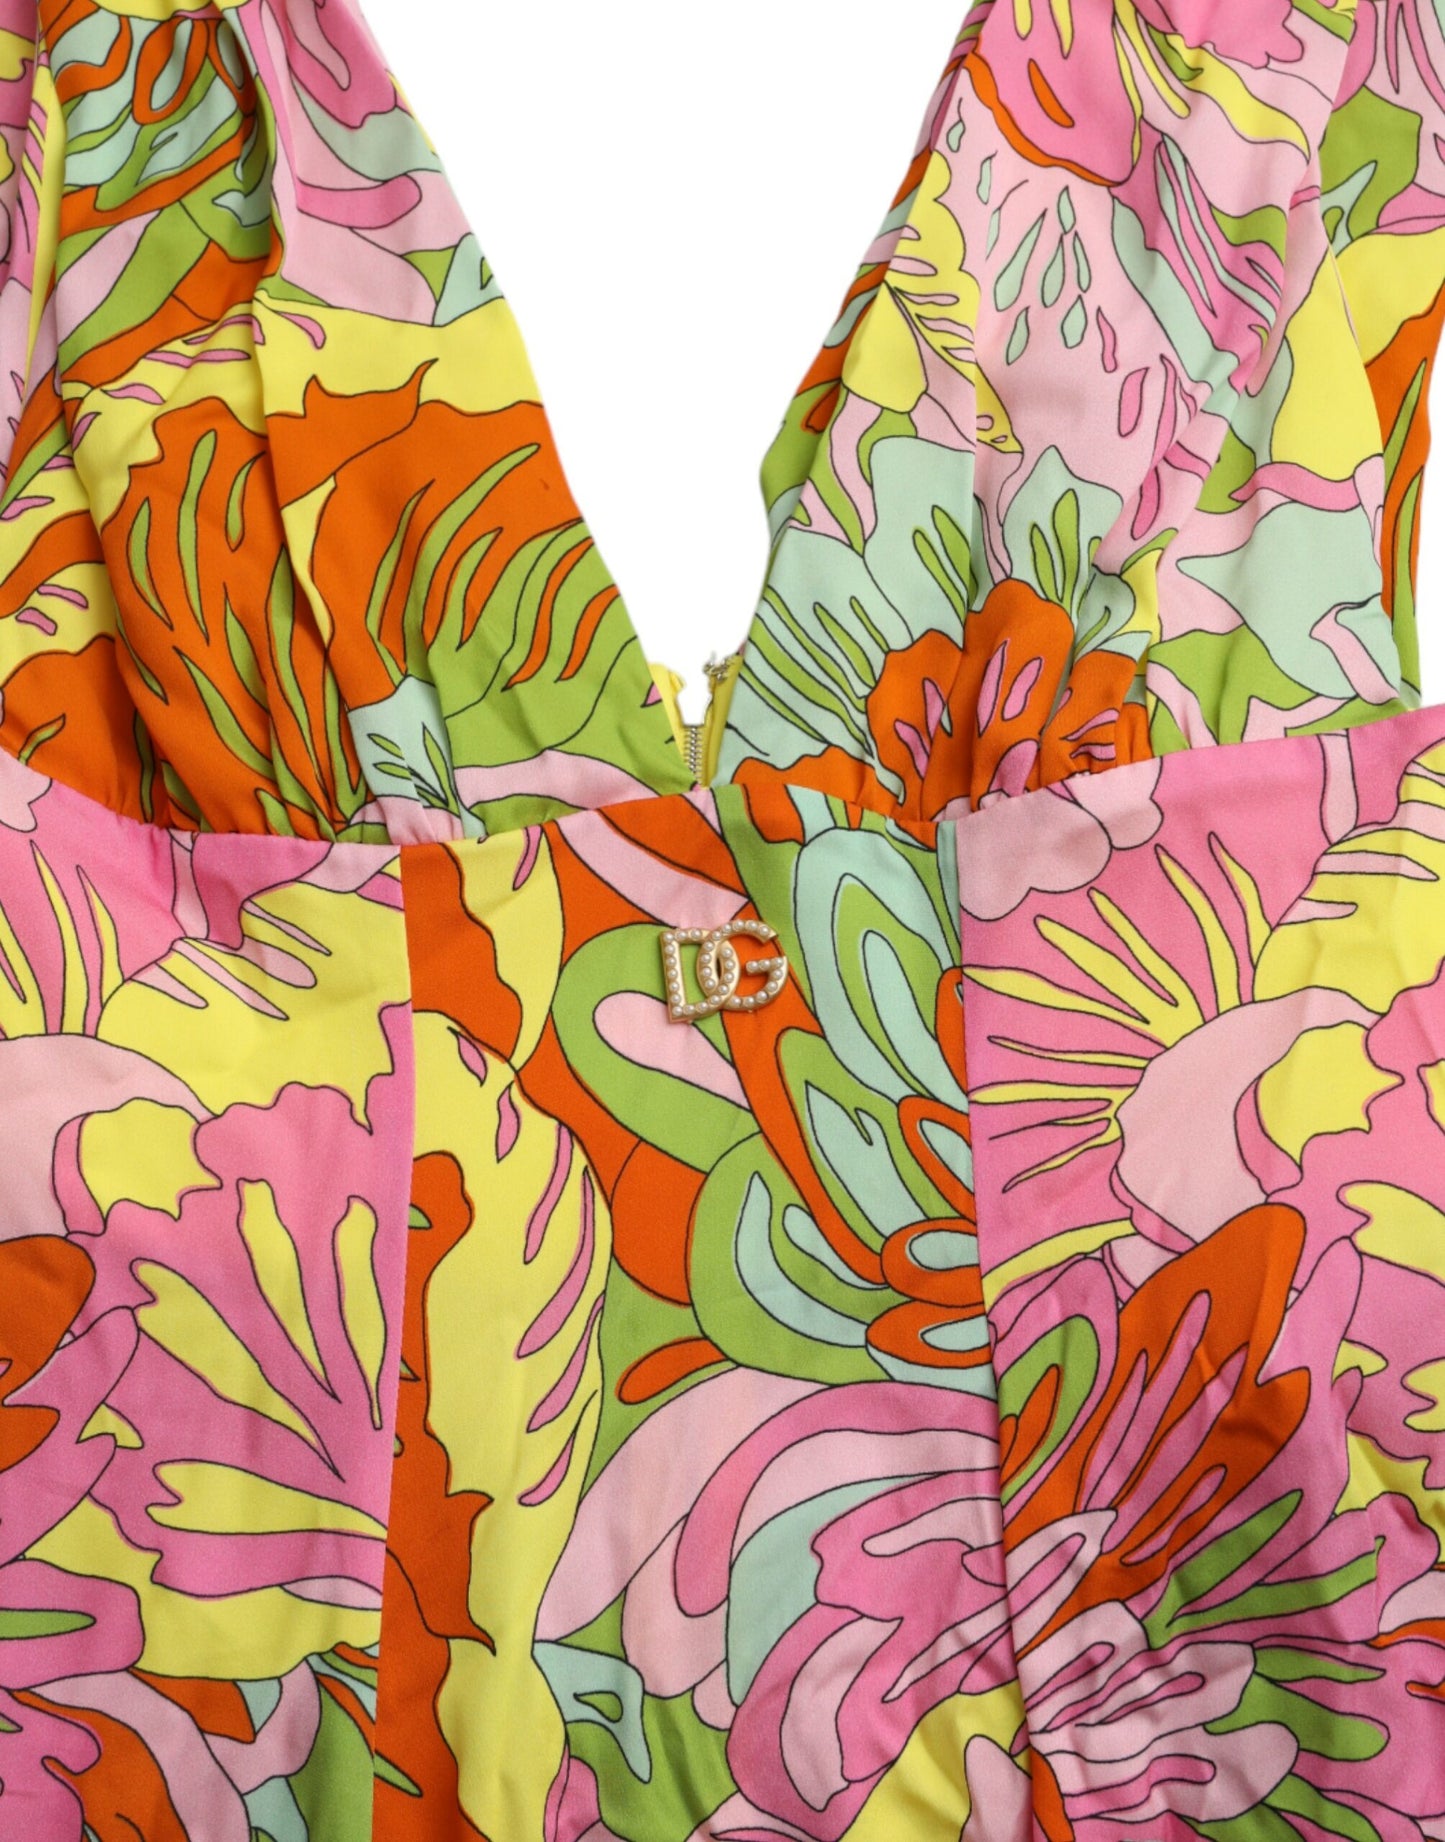 Multicolor Floral Silk A-Line Dress